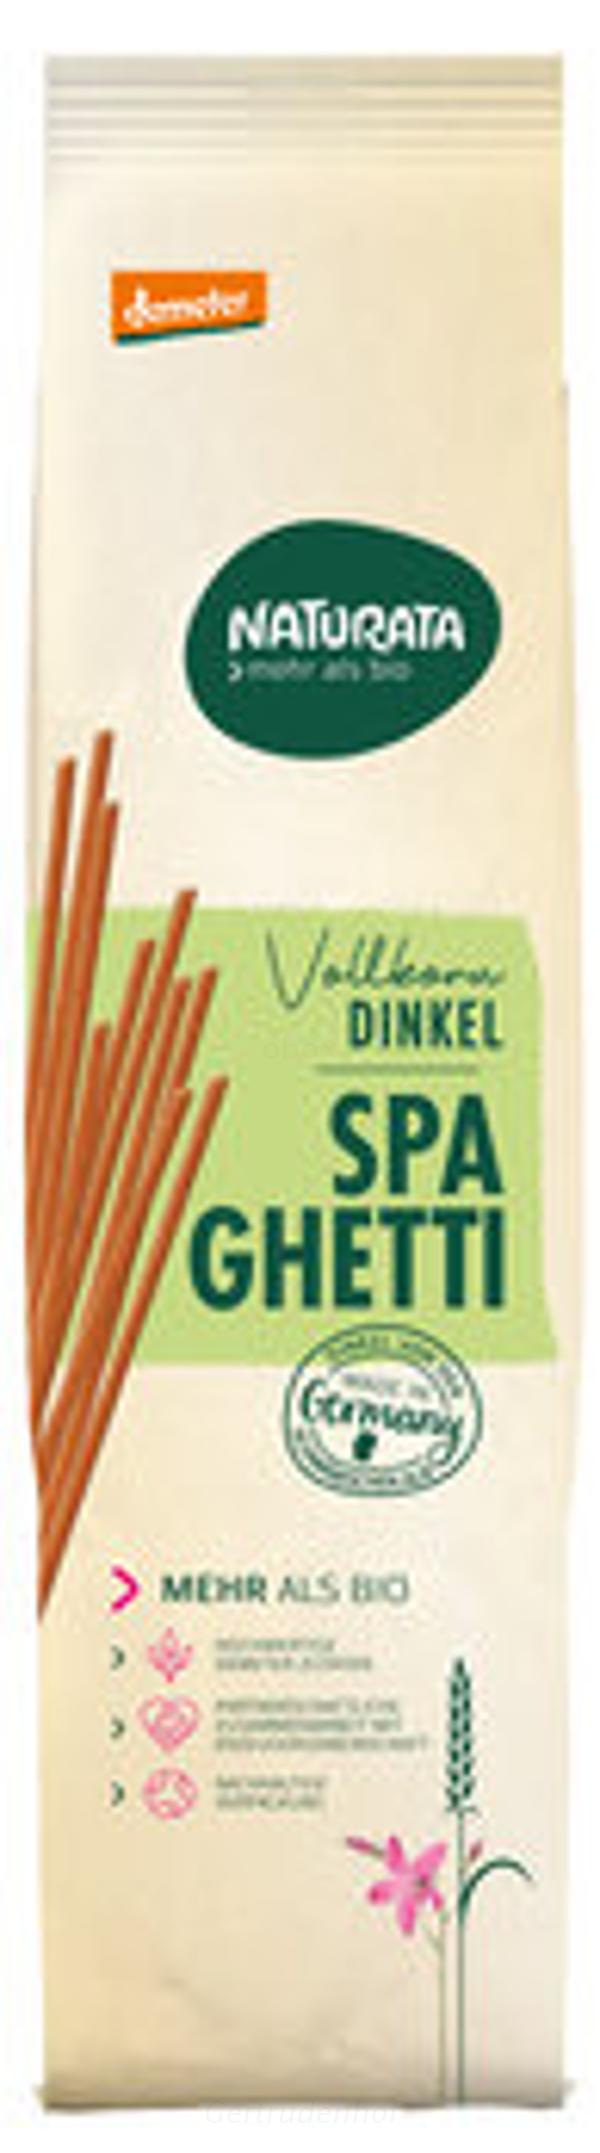 Produktfoto zu Dinkel Spaghetti Vollkorn NAT